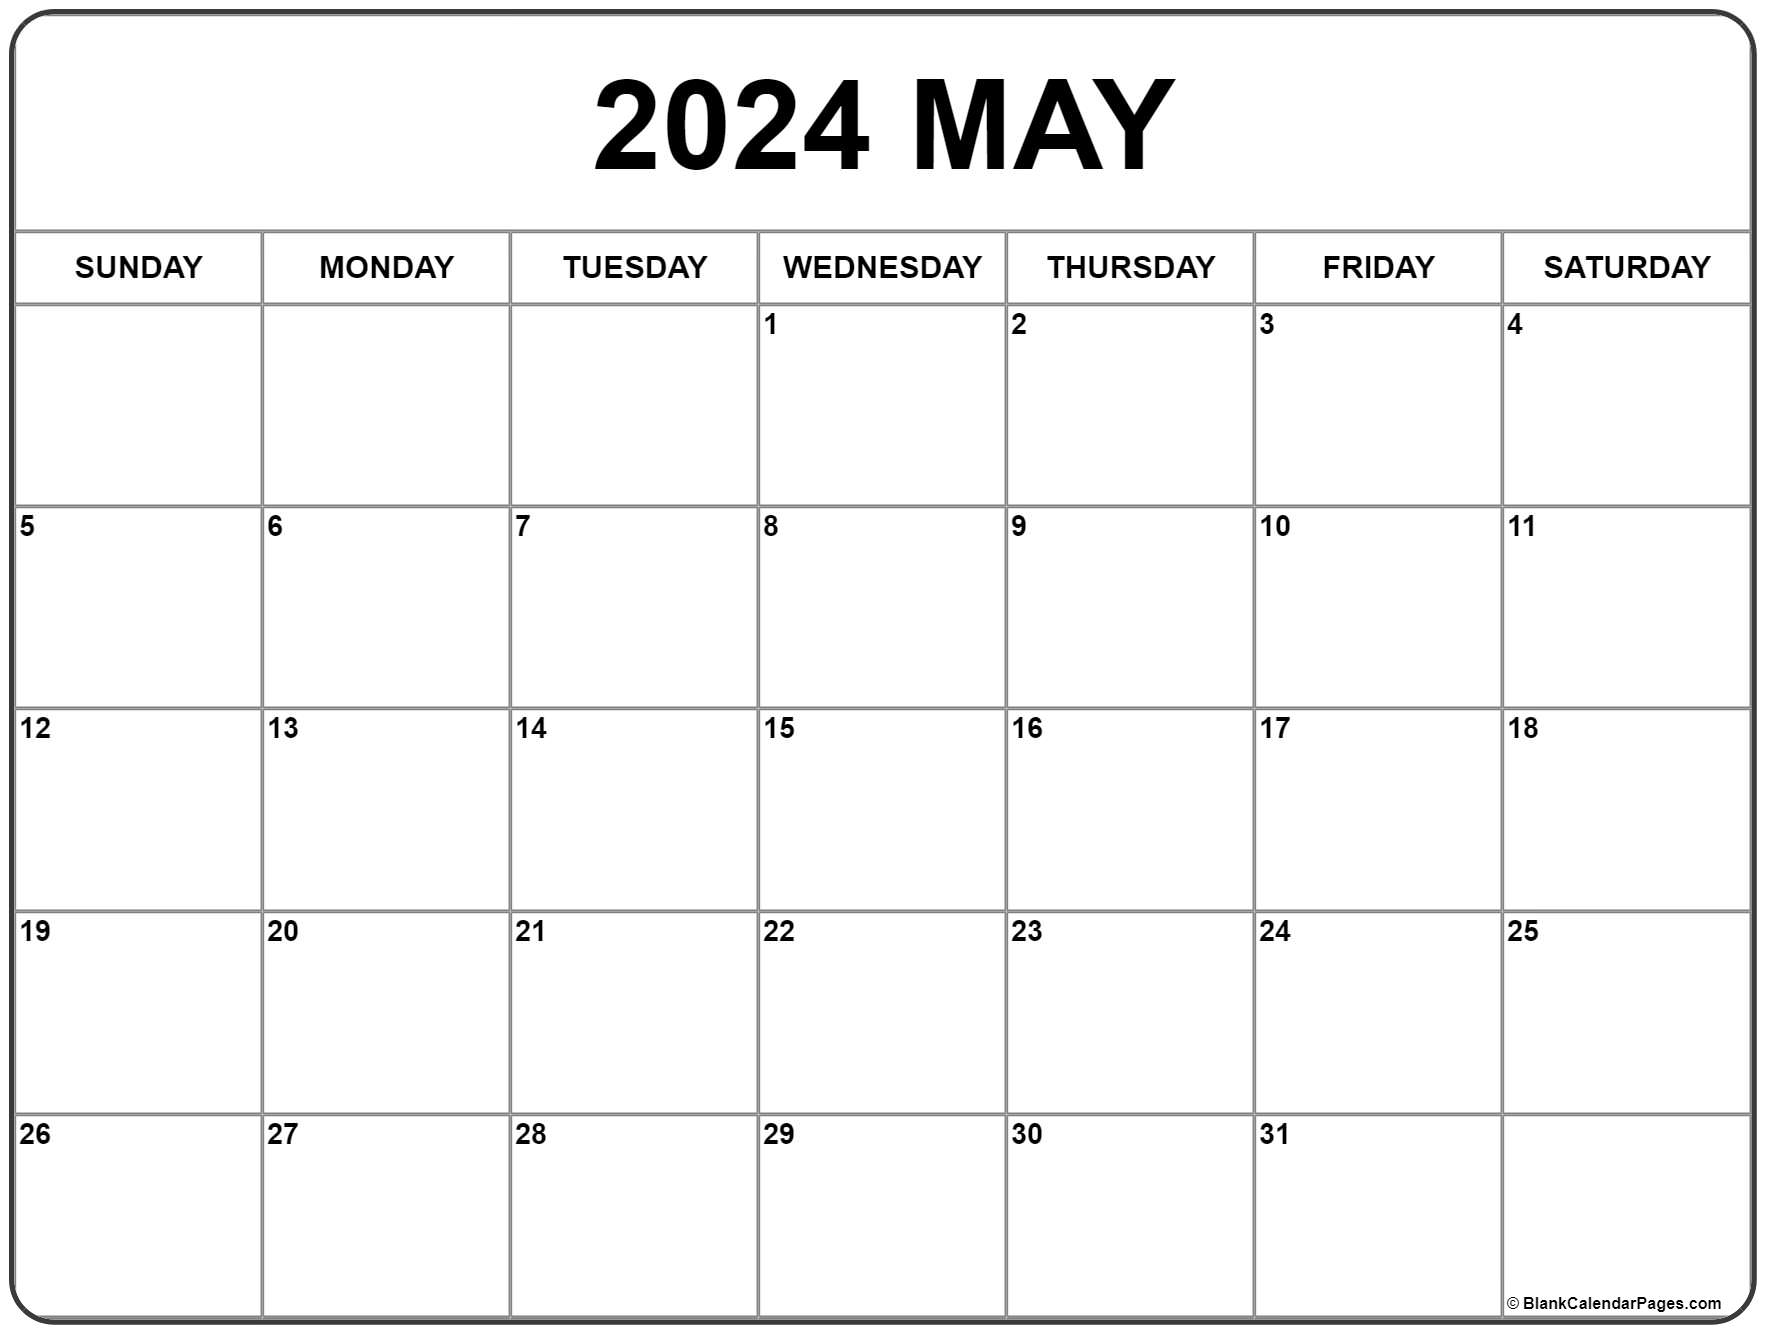 Free Printable Calendar May 2021 May 2021 calendar | free printable monthly calendars